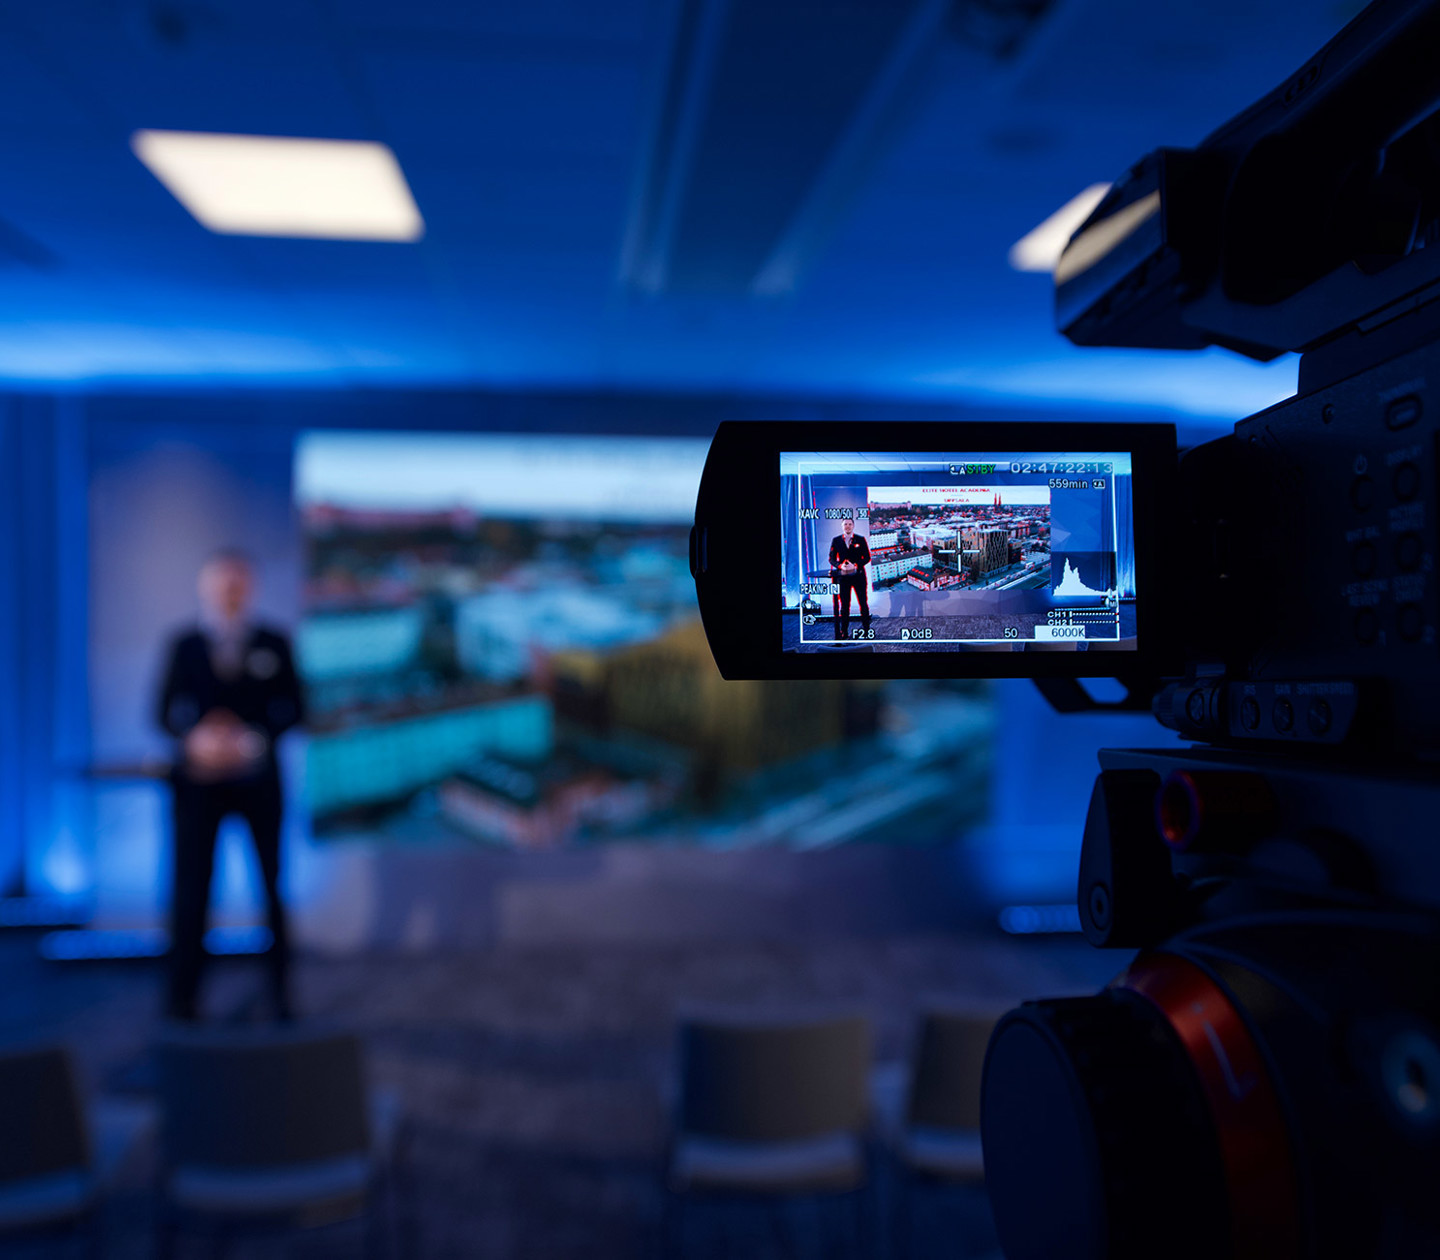 A man holding a presentation and a camera recording him